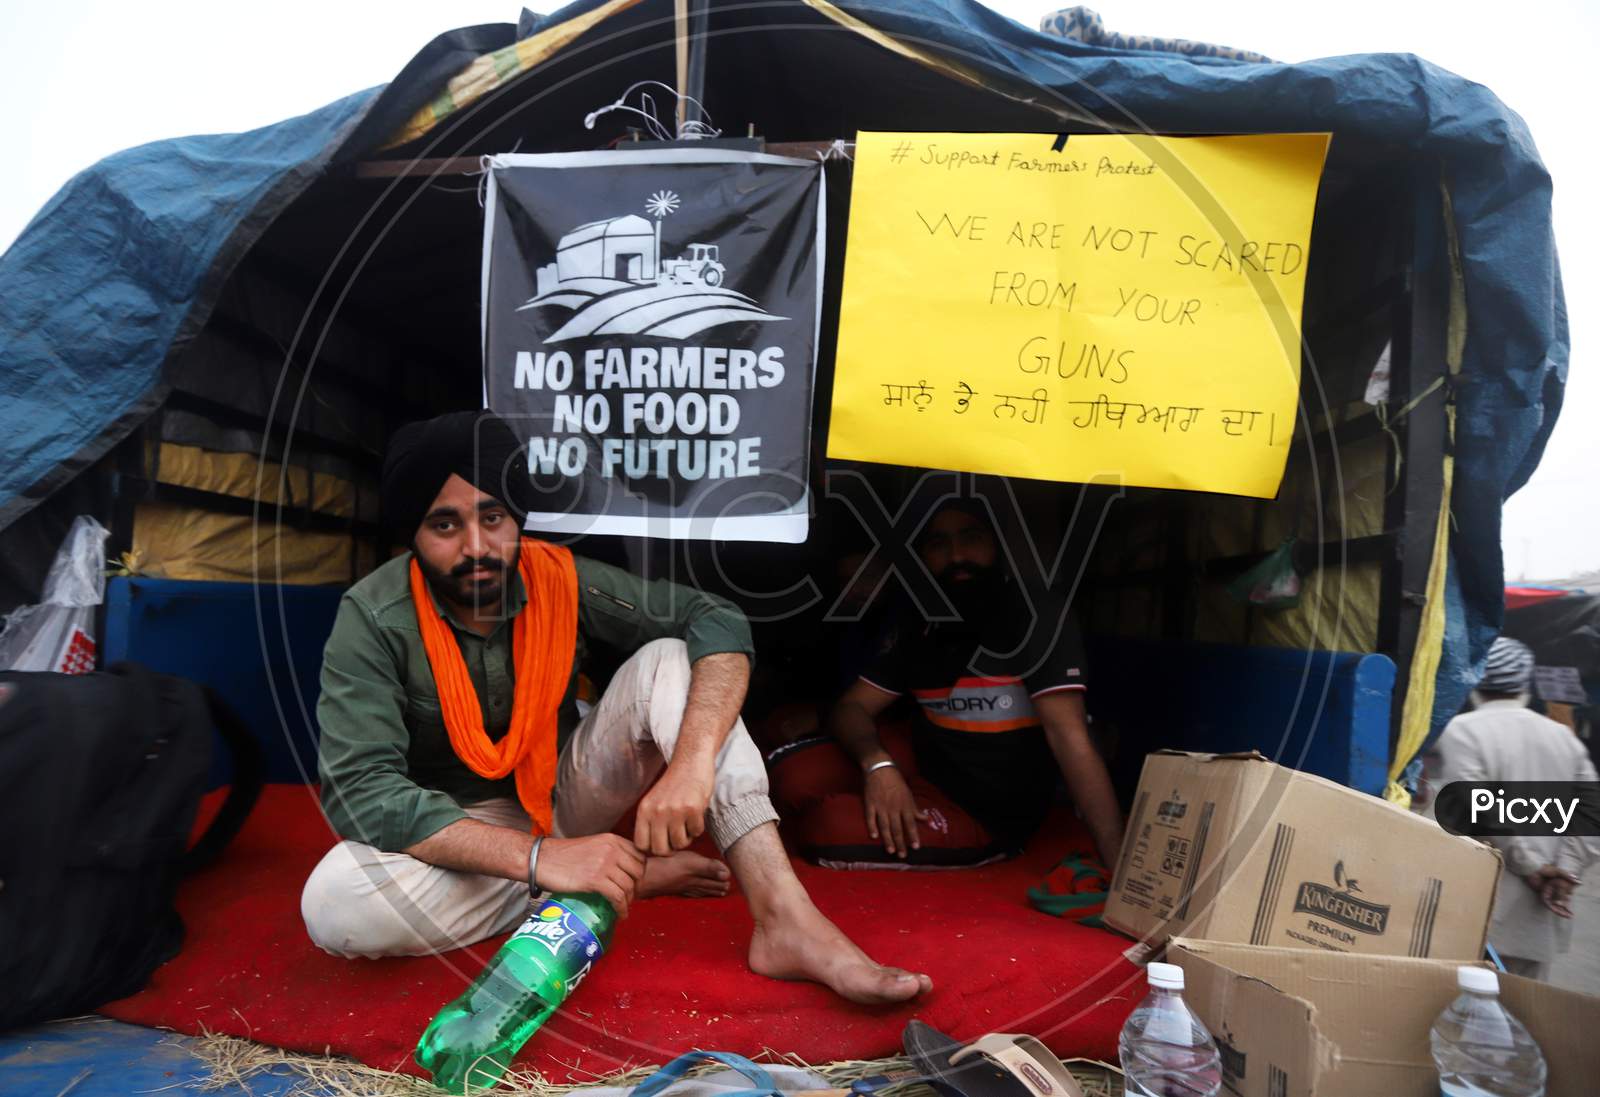 Farmers gathered at Singhu Border continue their protest against farm reform laws at Singhu border on December 6, 2020 near New Delhi, India.